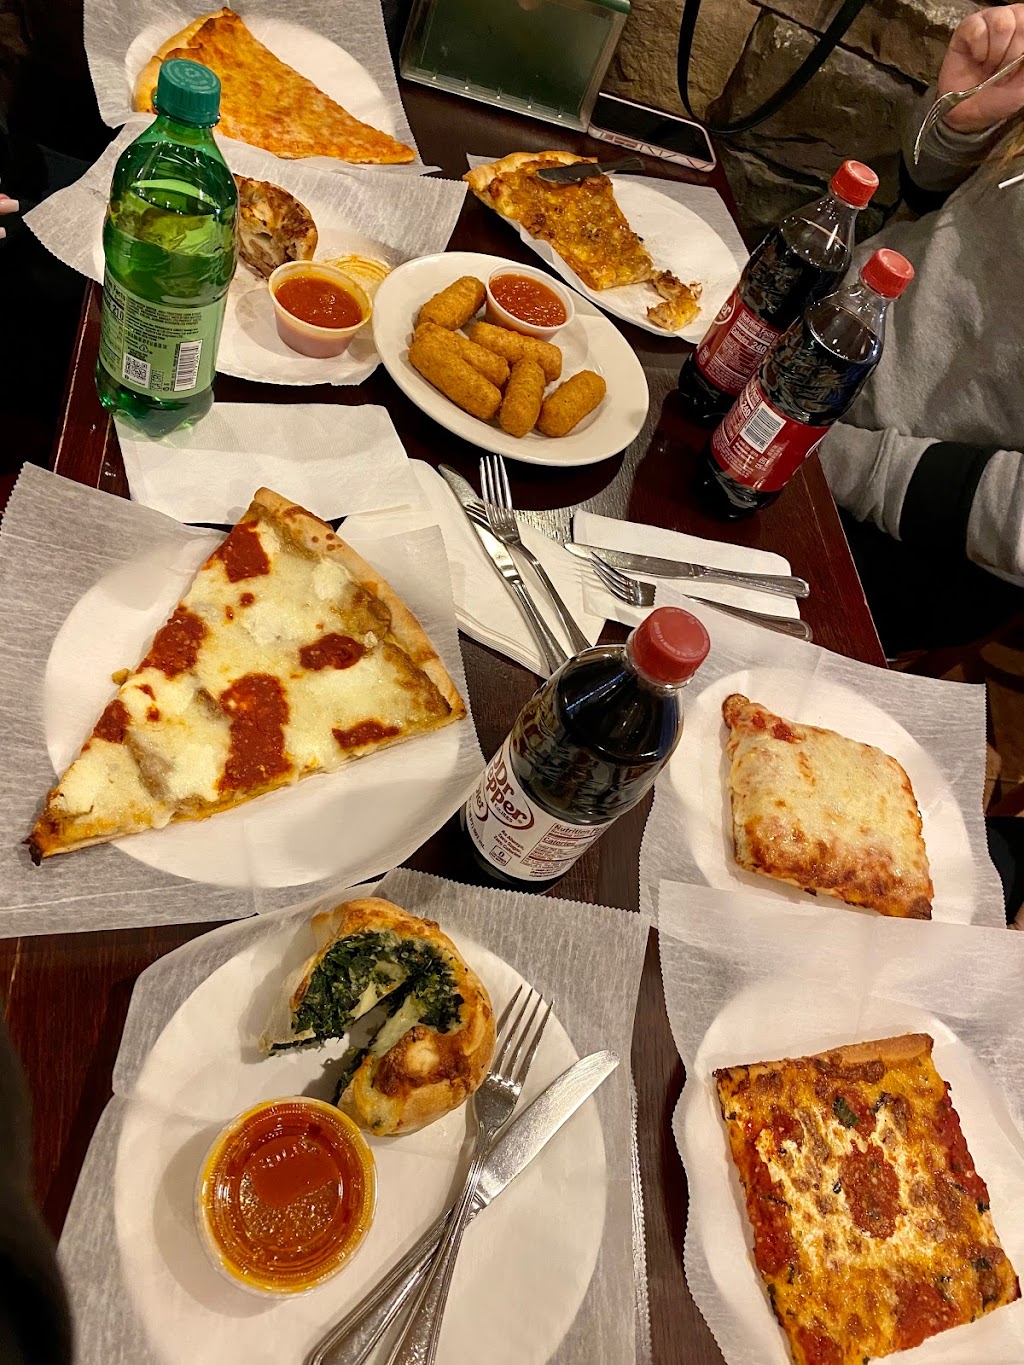 Bonappetito Pizzeria and Ristorante | 345 Terry Rd, Smithtown, NY 11787 | Phone: (631) 360-7744